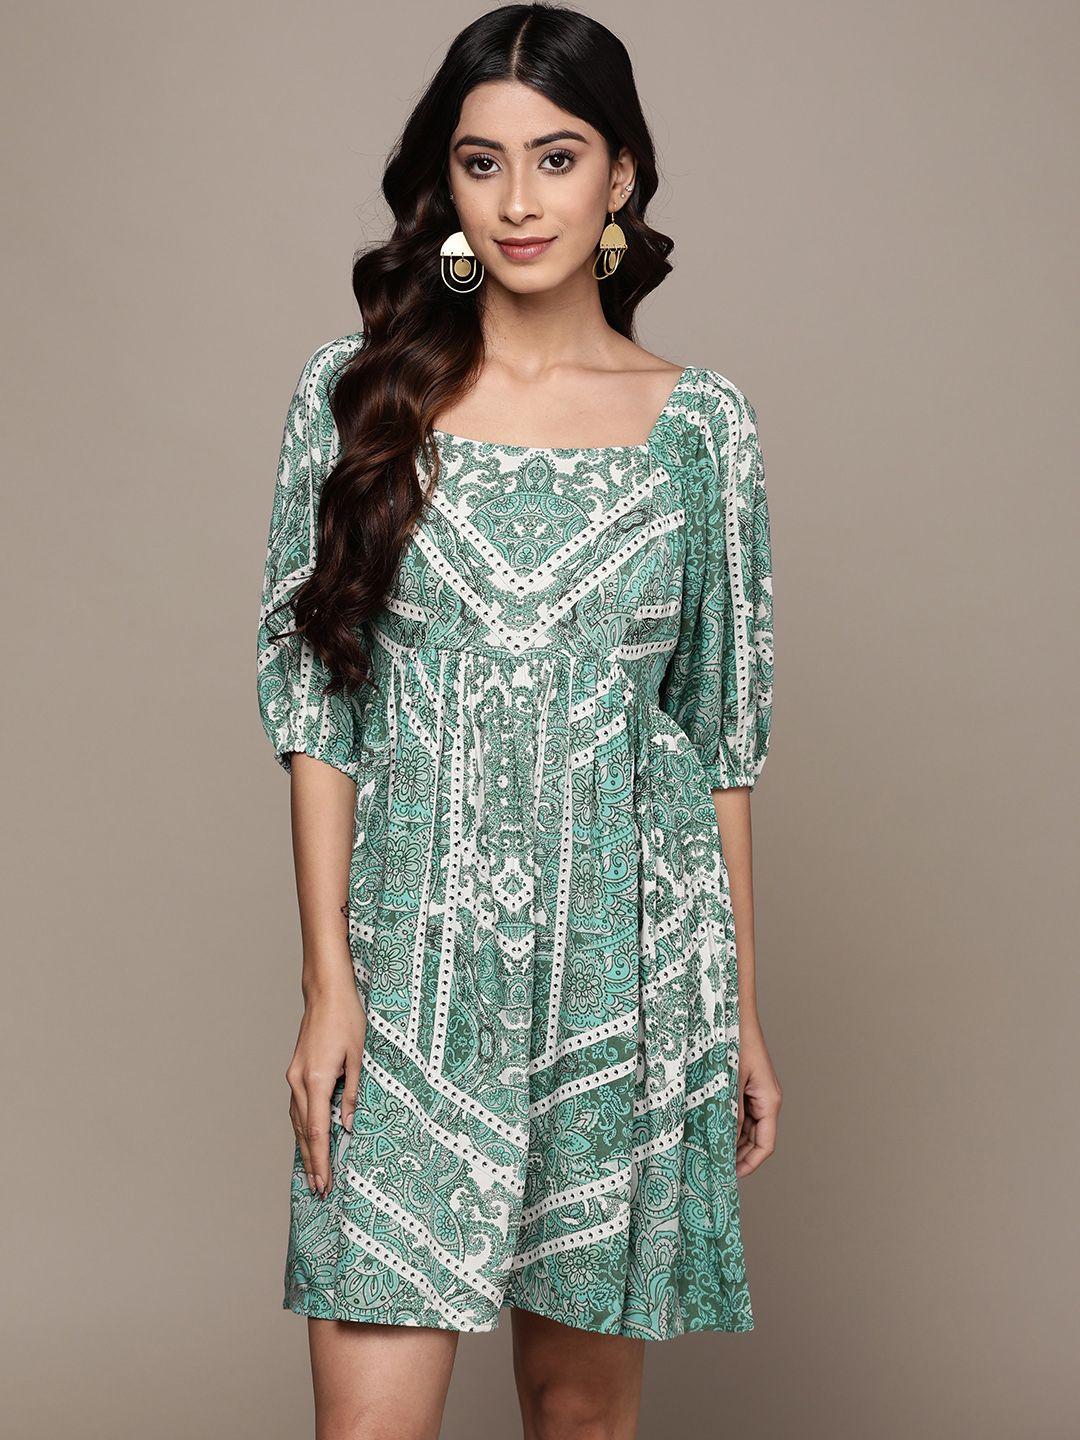 label ritu kumar sea green & white ethnic motifs a-line dress